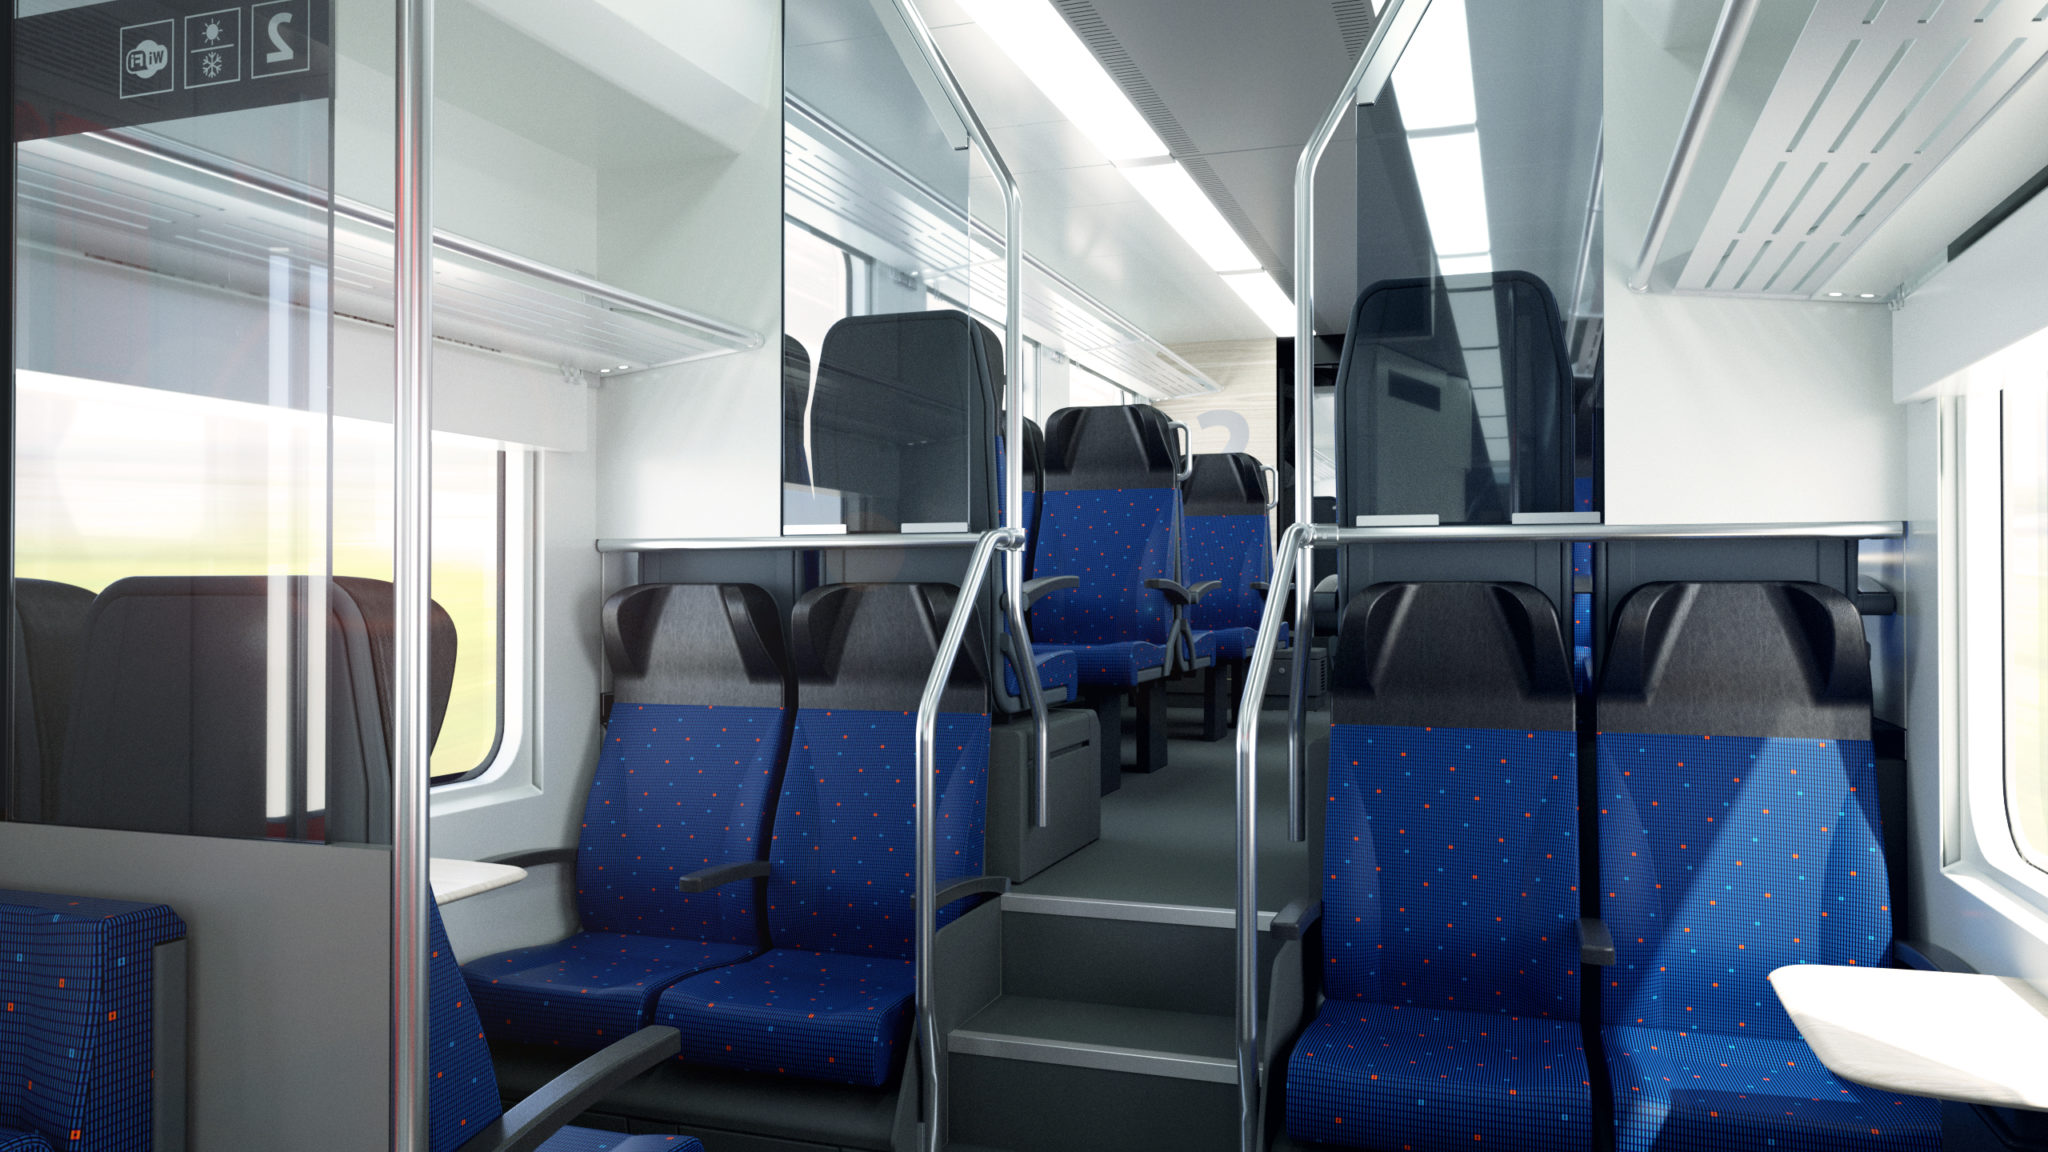 Skoda RegioPanter interior visualisation - seats